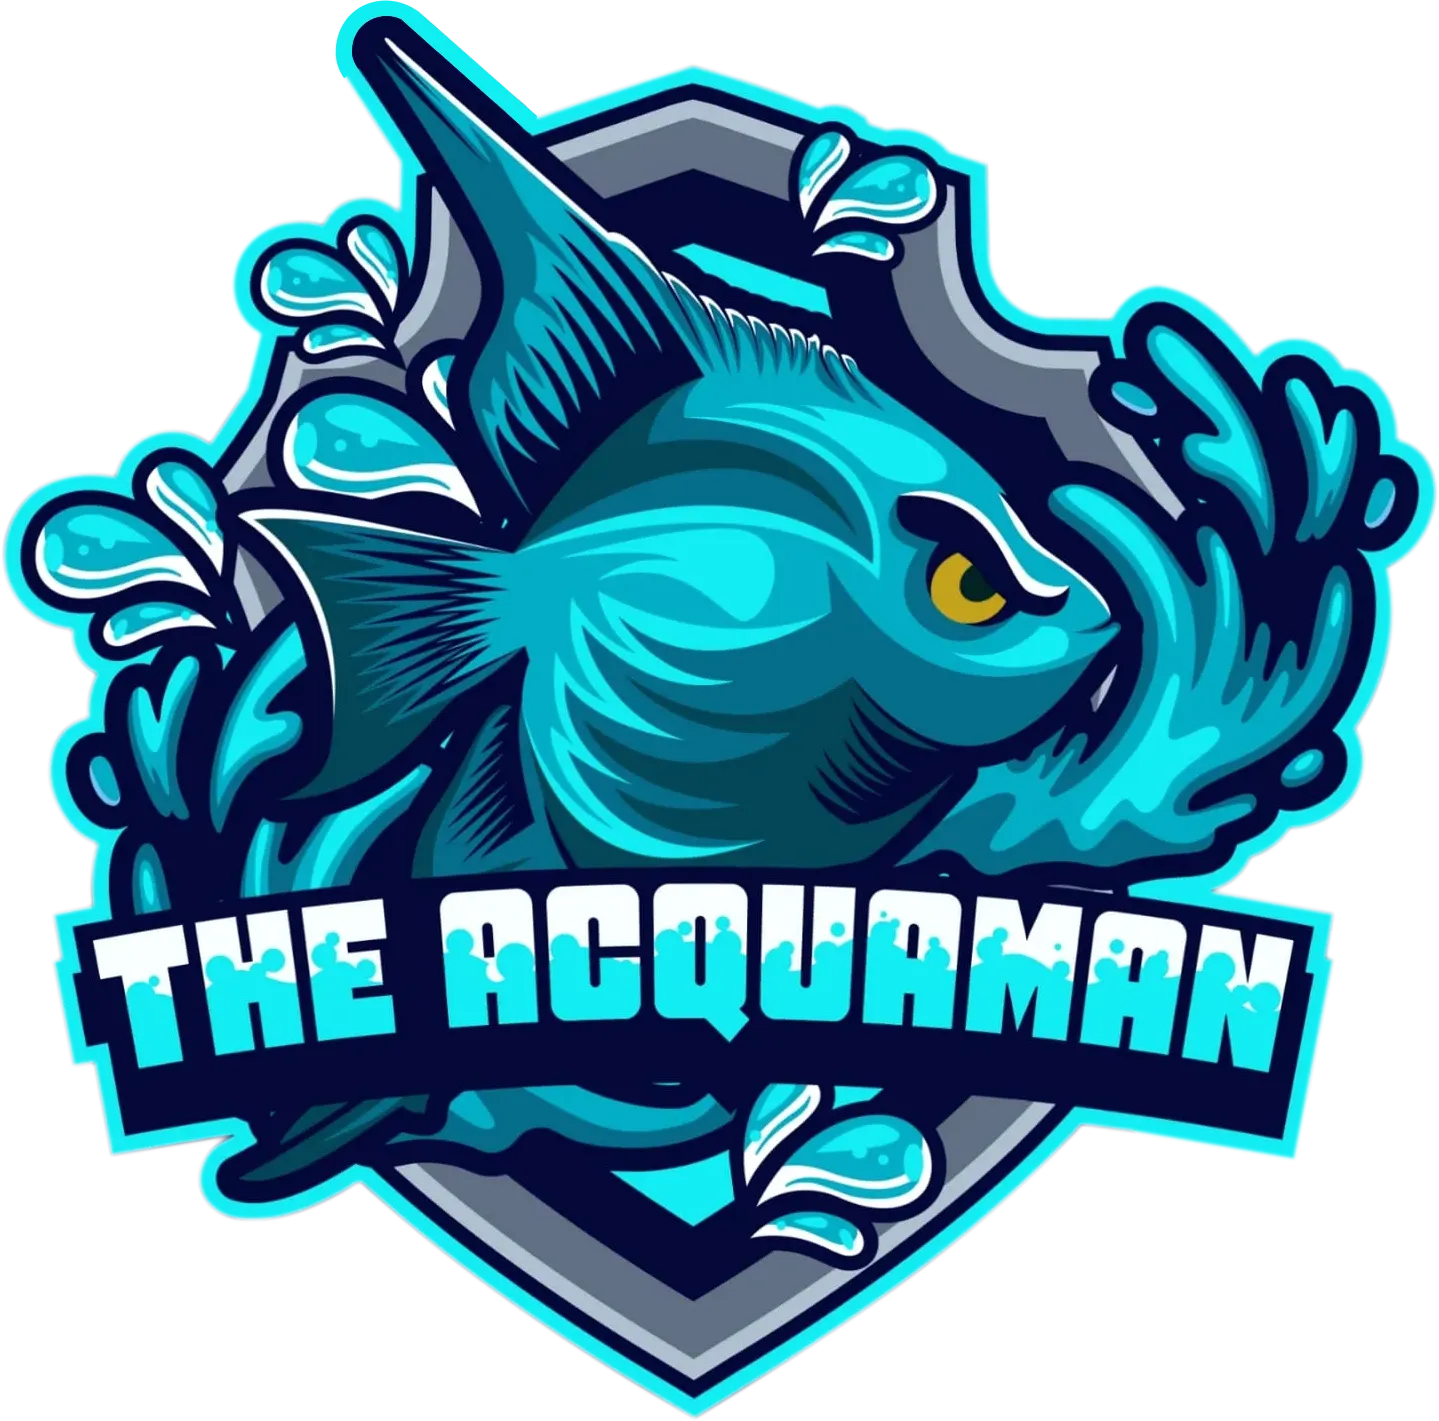 Logo TheAcquaman